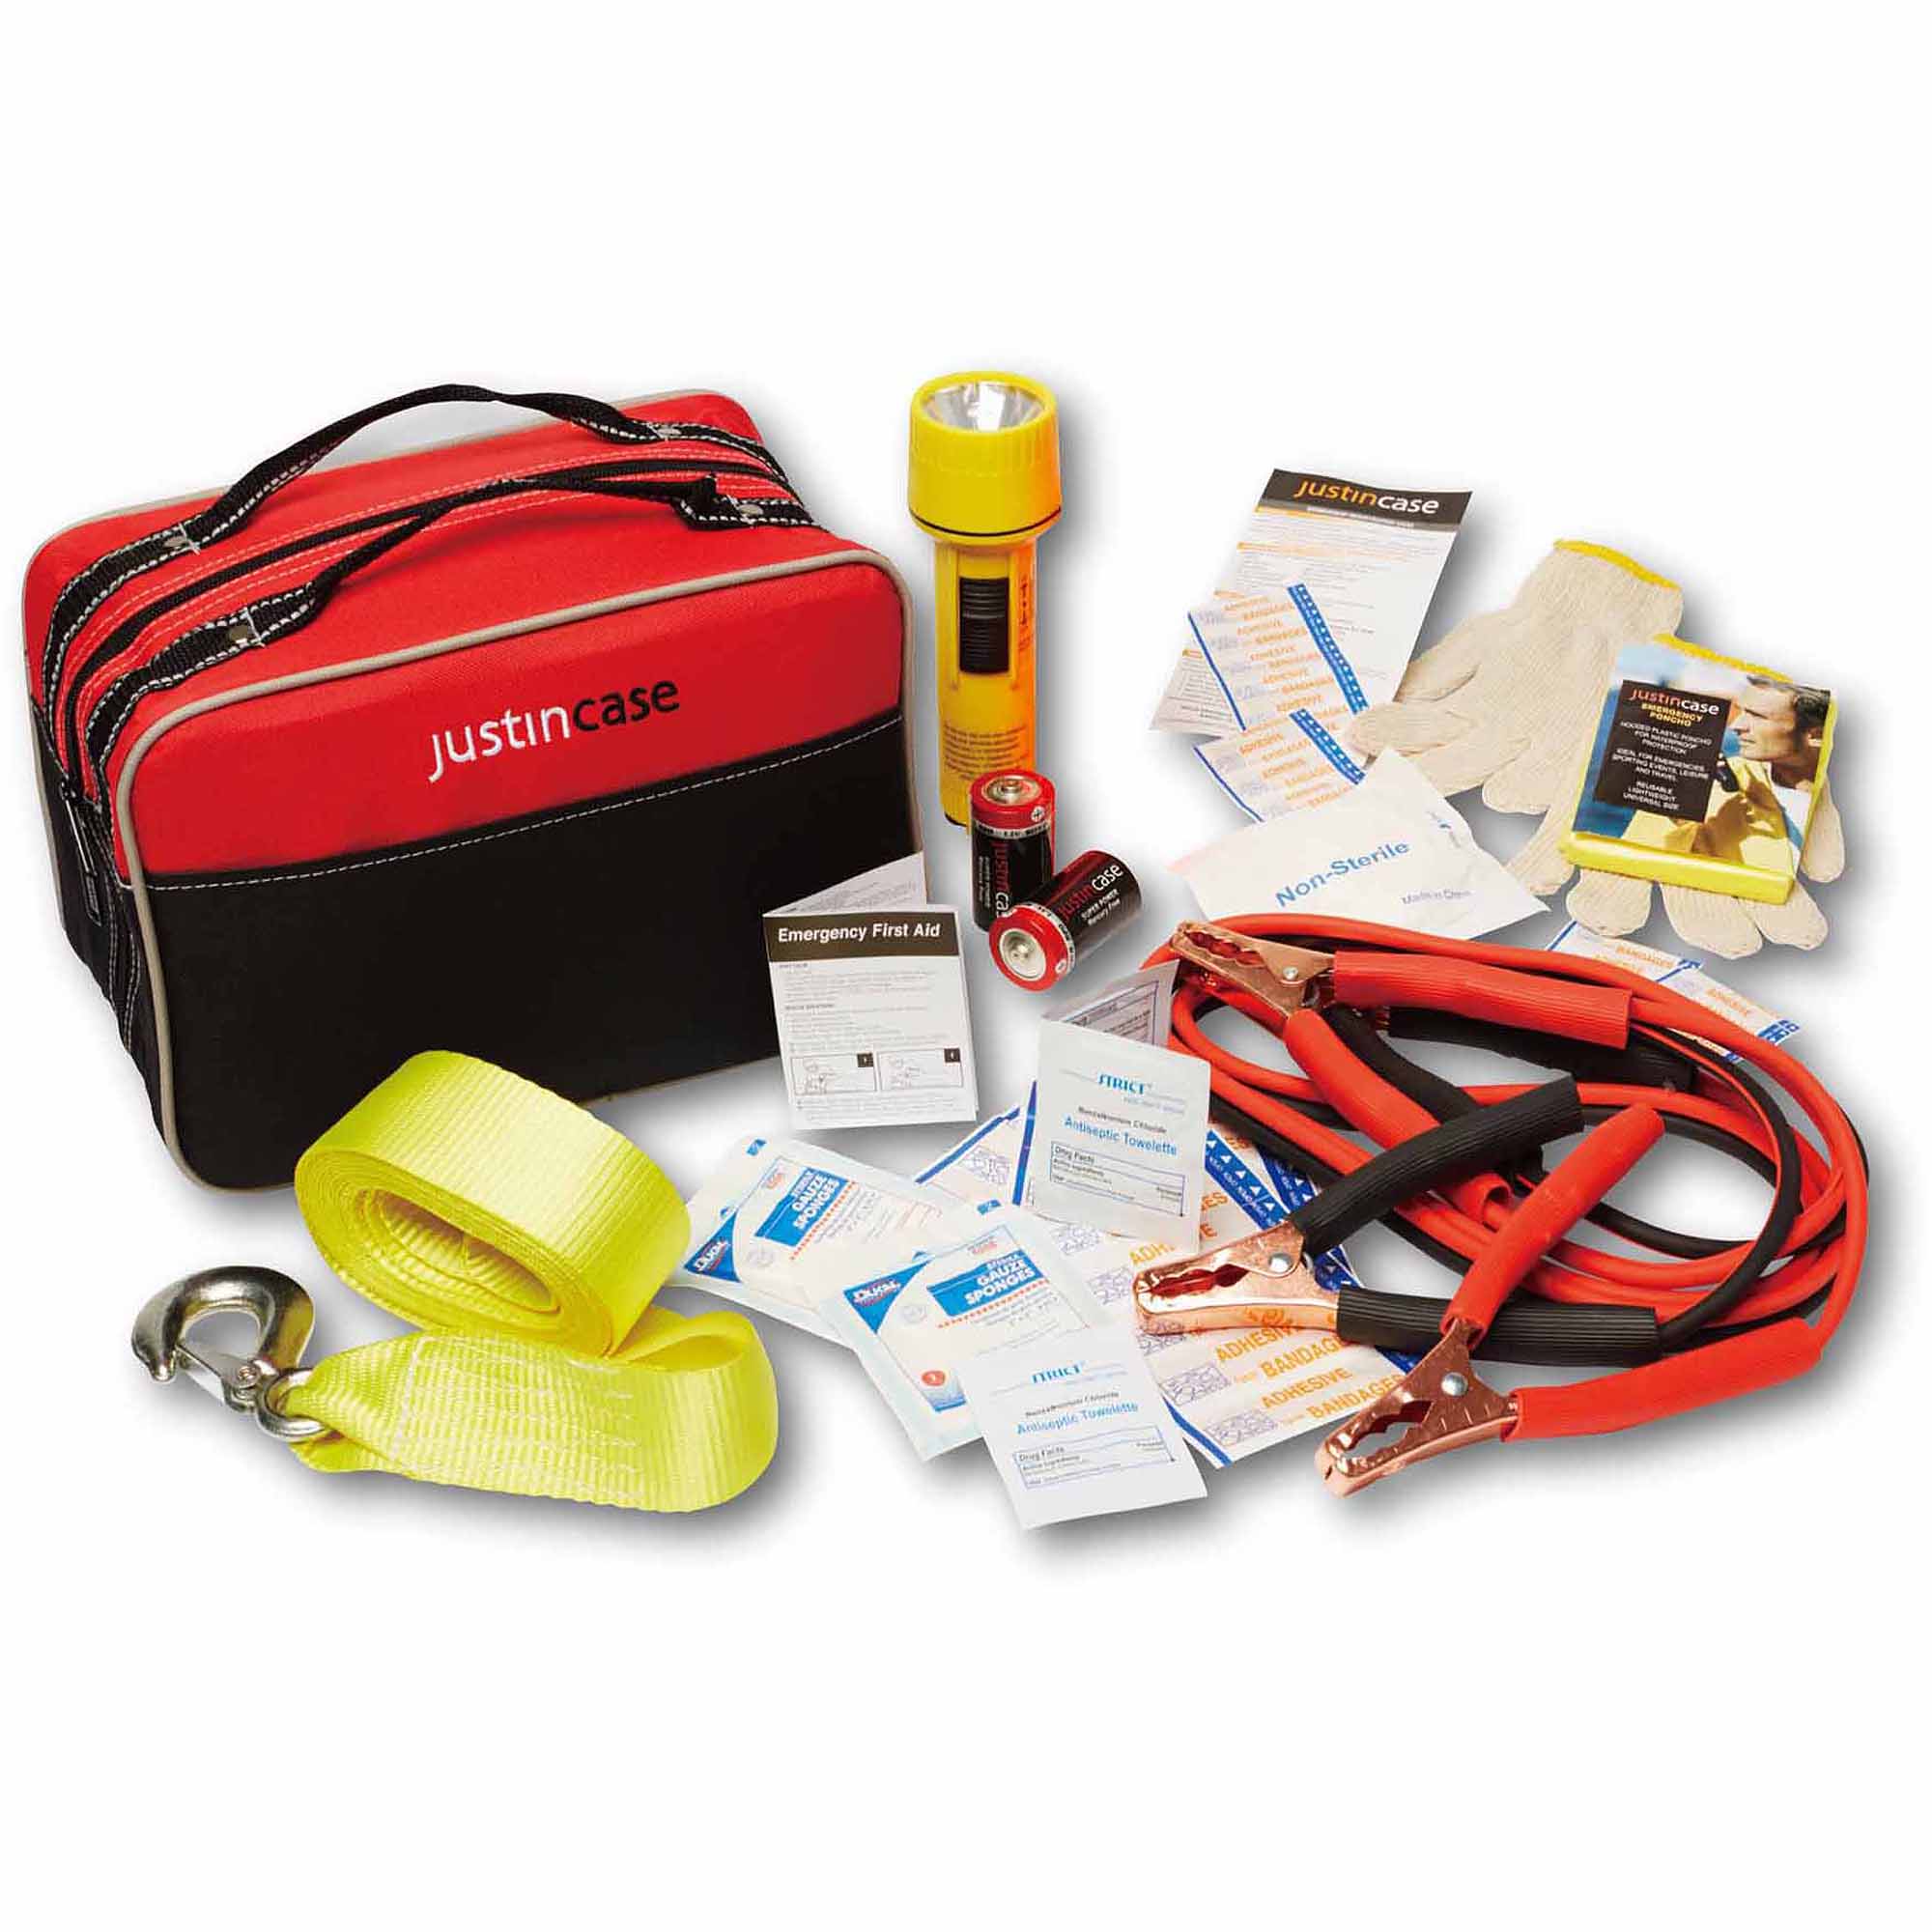 Justincase Travel Pro Auto Safety Kit - image 1 of 7